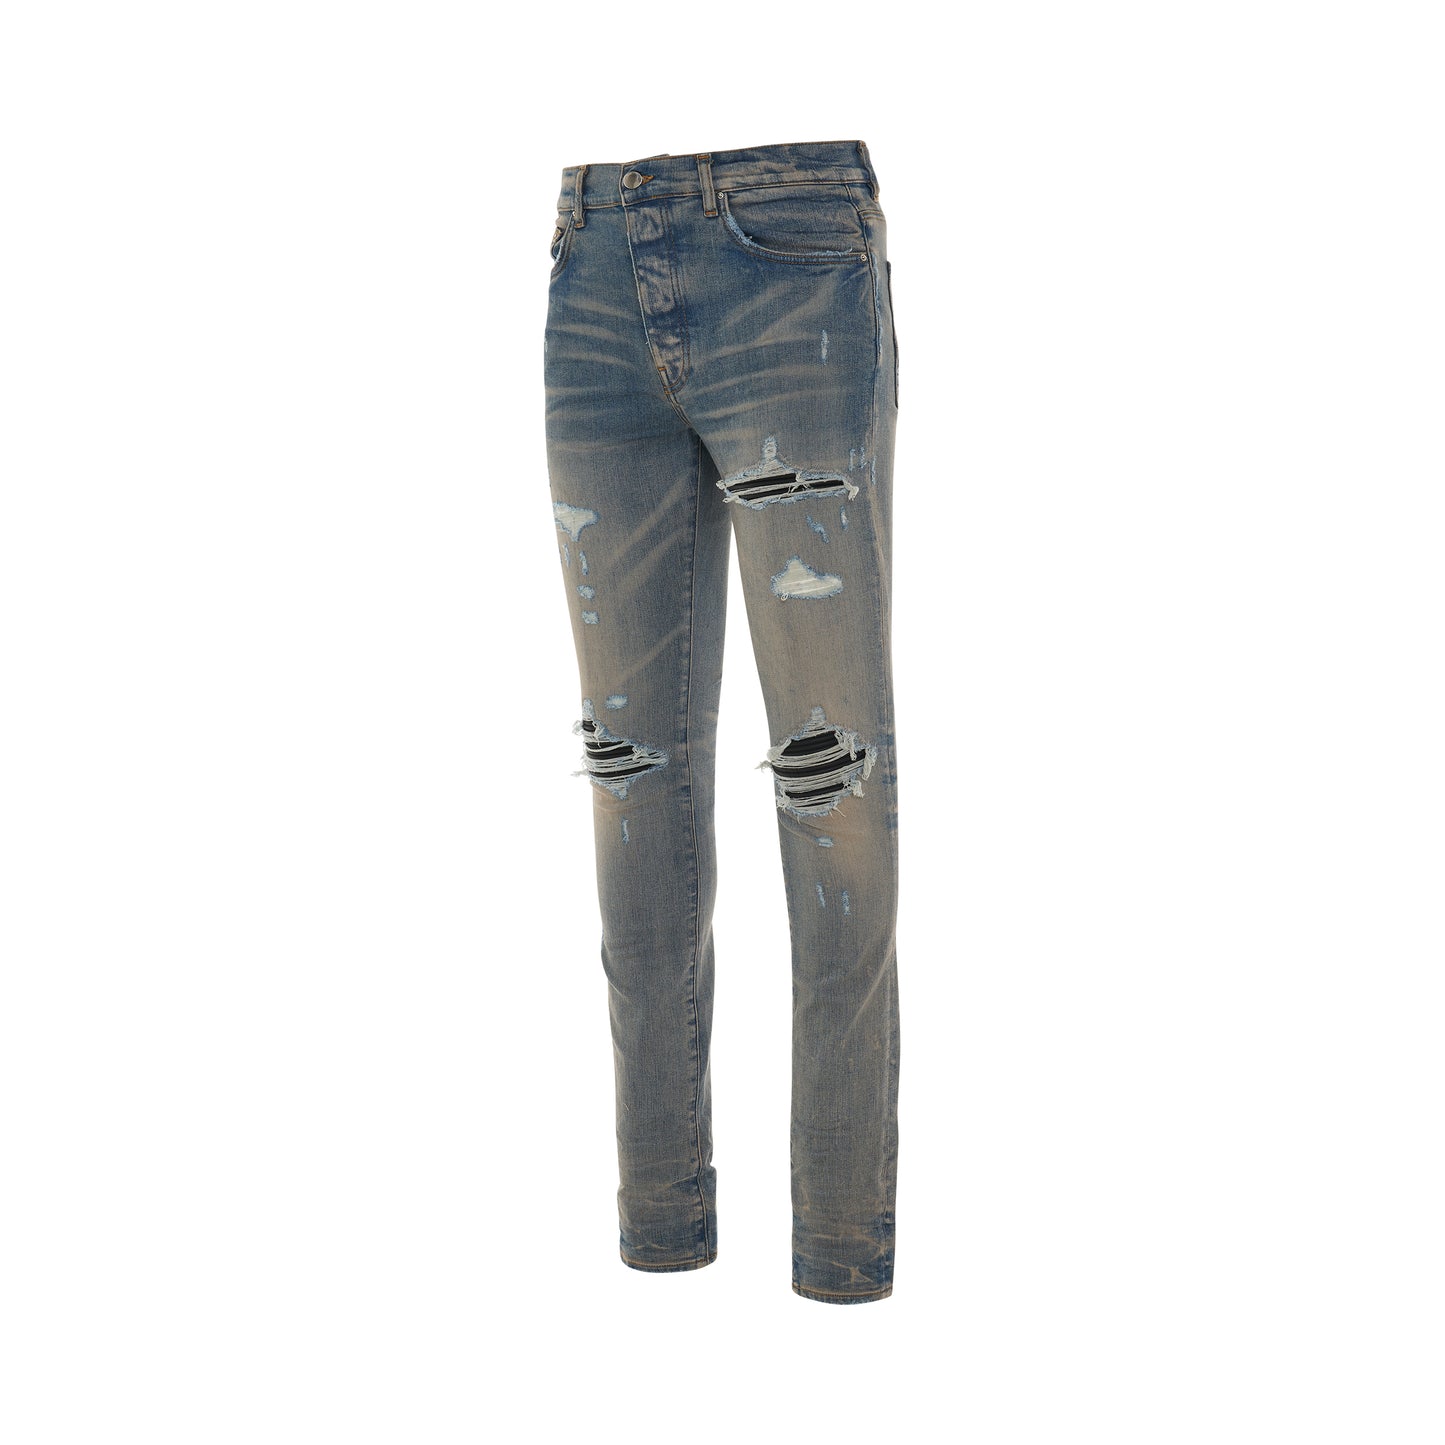 MX1 Jeans in Clay Indigo